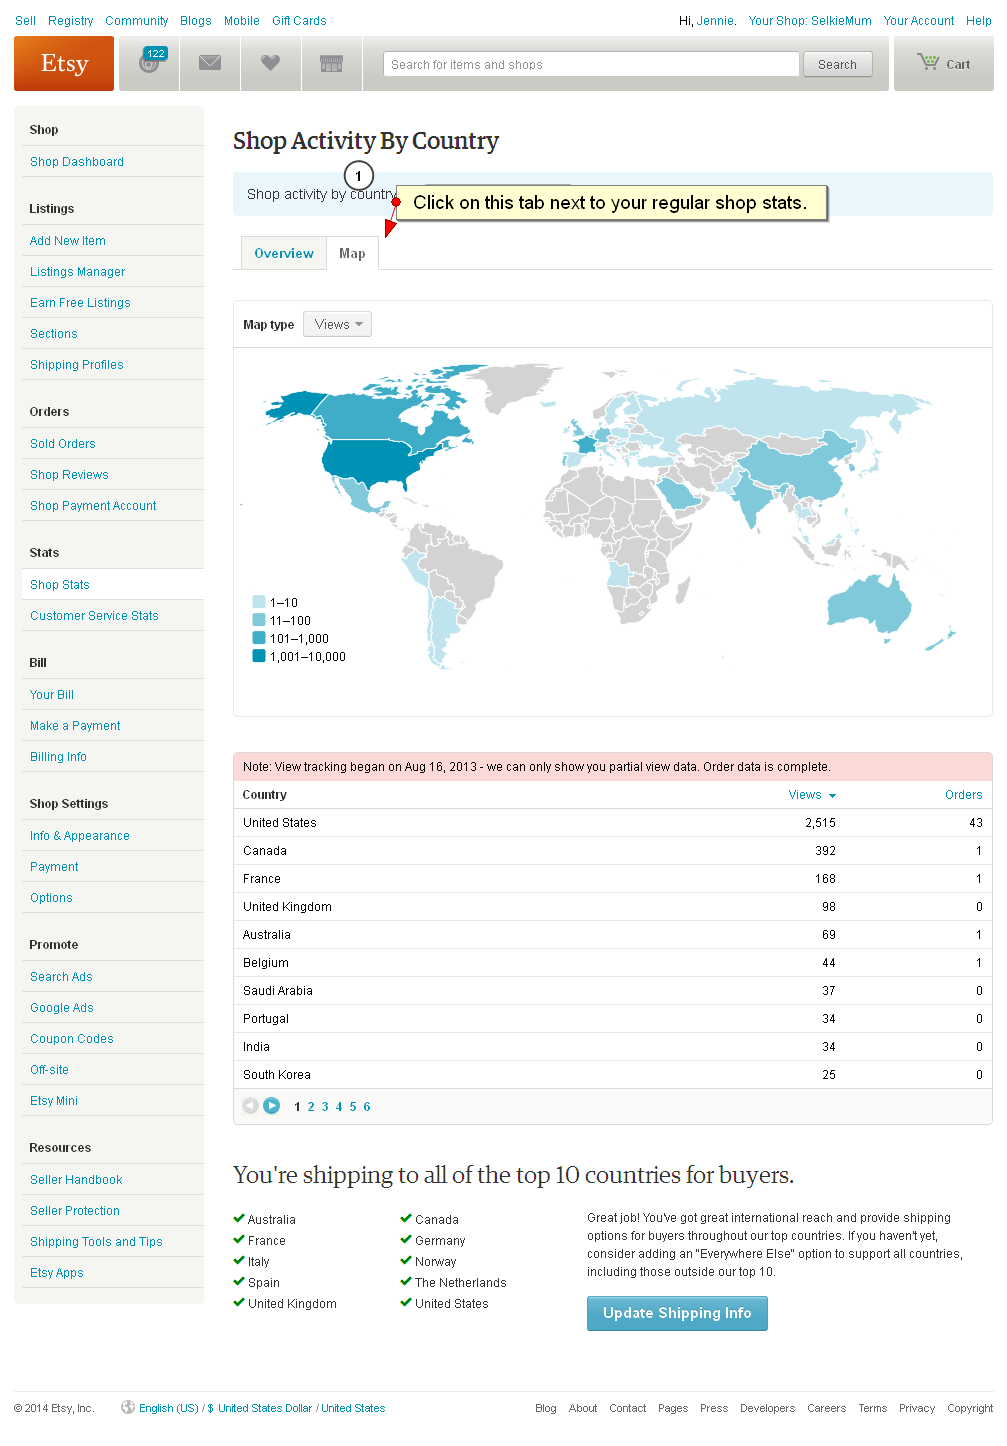 Etsy Translator and Shop Stats Map